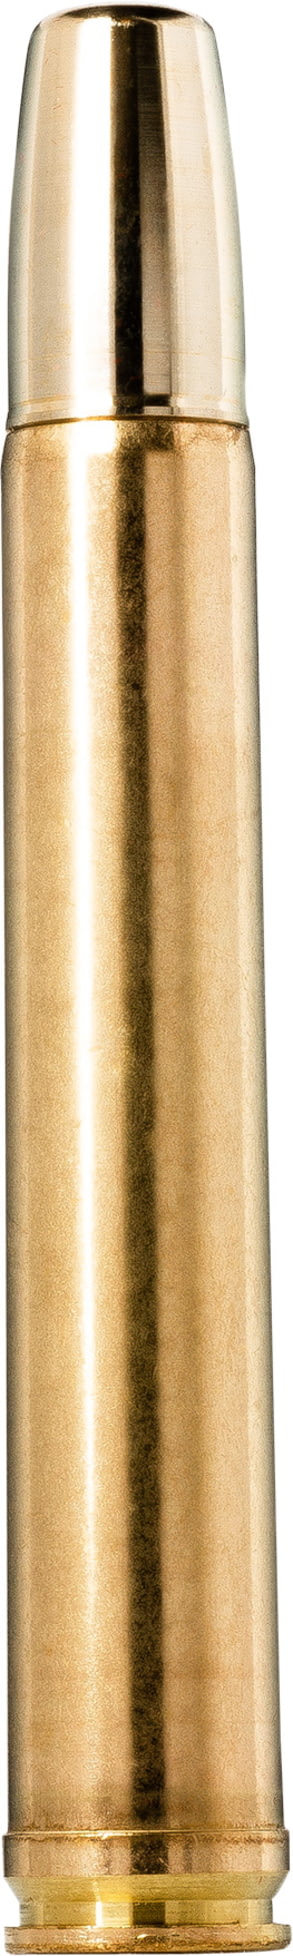 Norma Solid Ammunition .458 Lott 500 Grain Solid Brass Cased Centerfire Rifle Ammunition